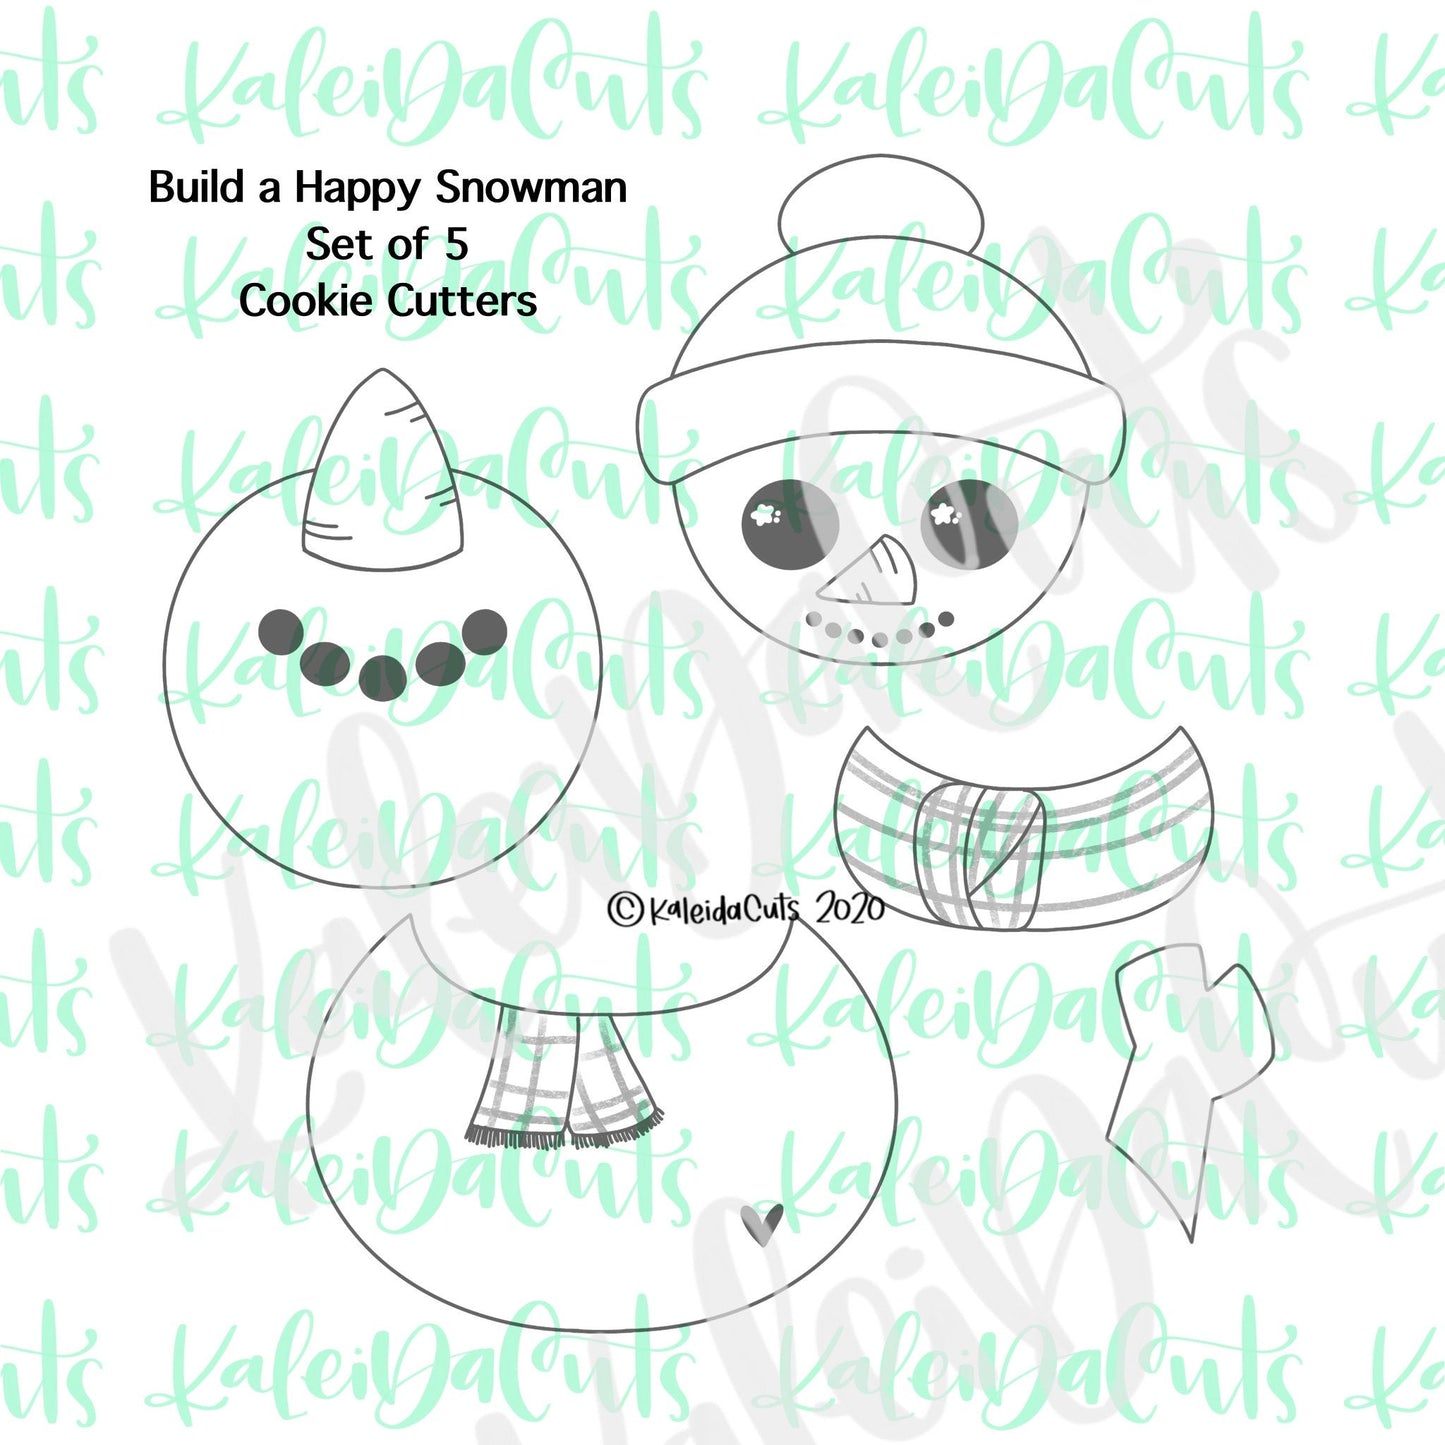 Build a Happy Snowman Set - 5 Cookie Cutters